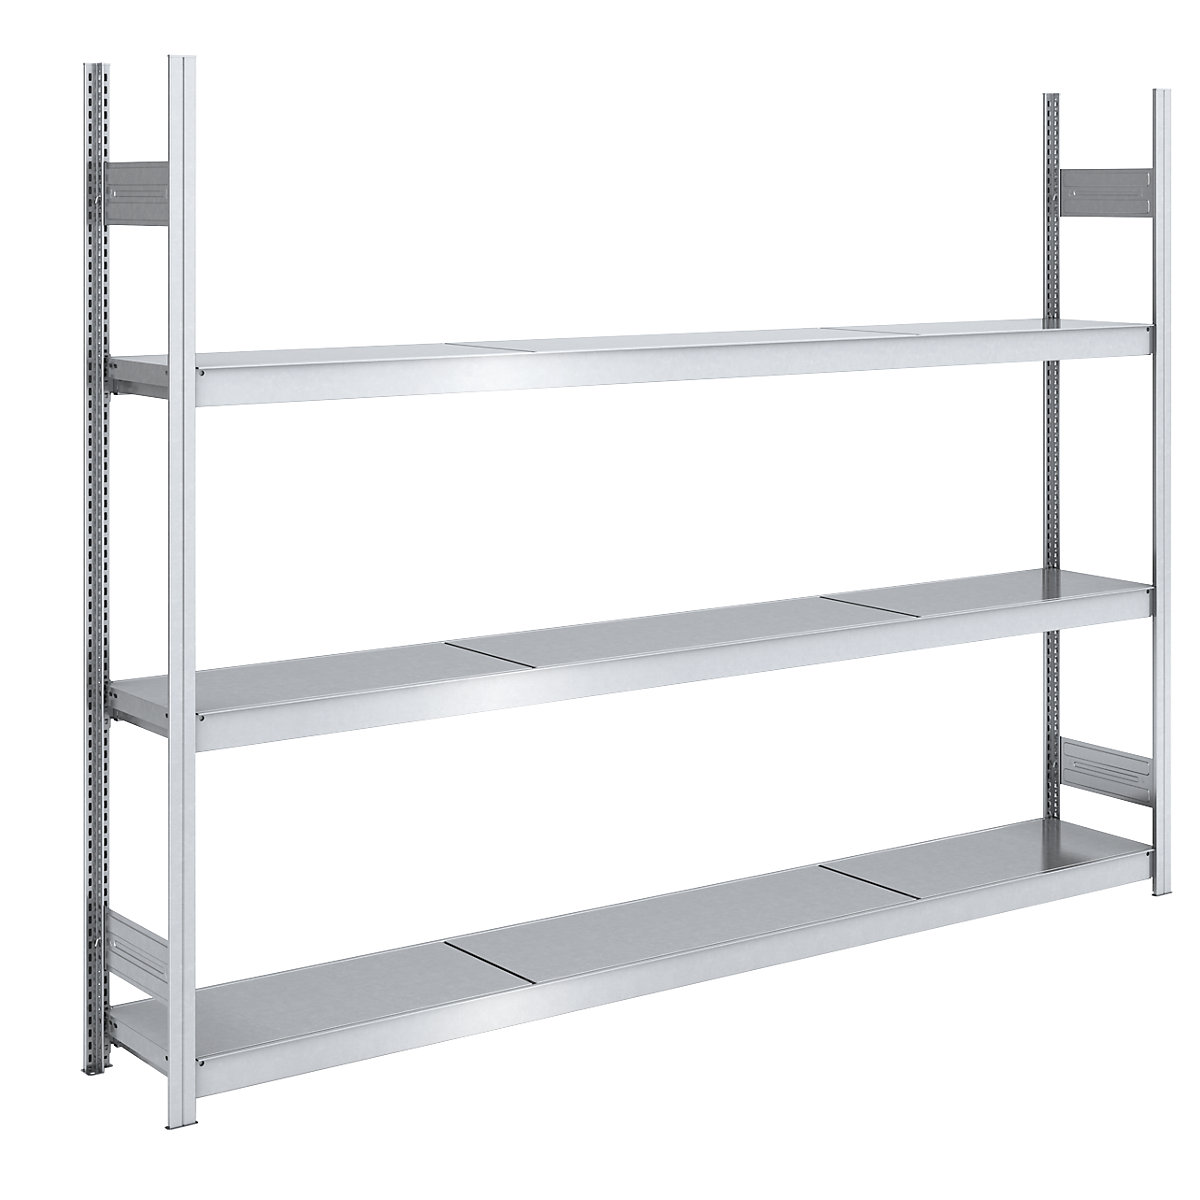 Wide span boltless shelving unit, zinc plated – hofe, shelf WxD 2500 x 400 mm, standard shelf unit, 3 steel shelves, height 2000 mm